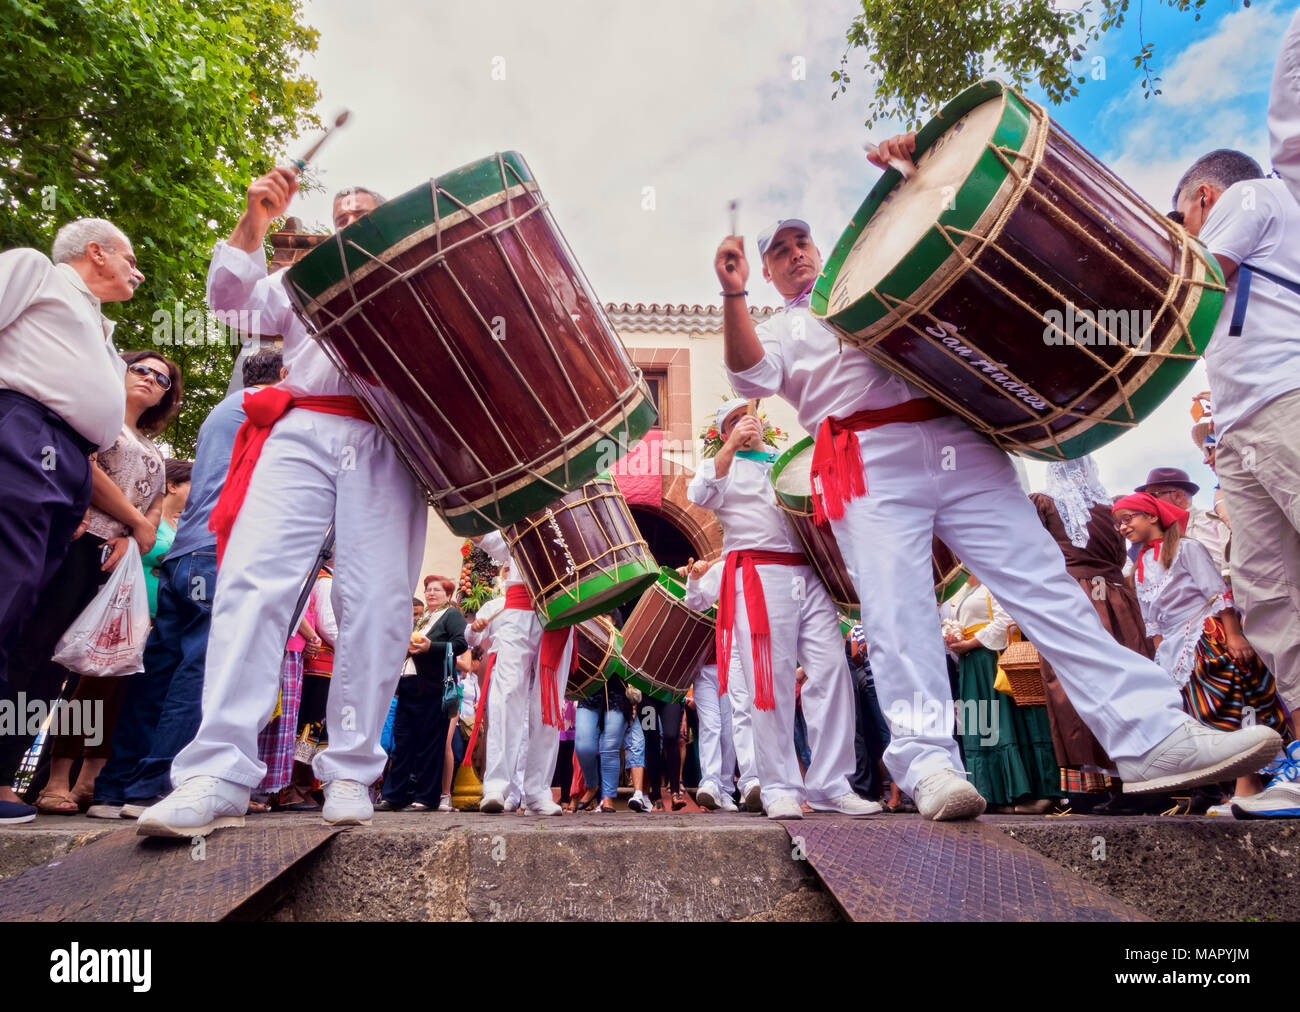 Drums in parade, Romeria de San Benito de Abad, traditional street party, San Cristobal de La Laguna, Tenerife Island, Canary Islands, Spain Stock Photo